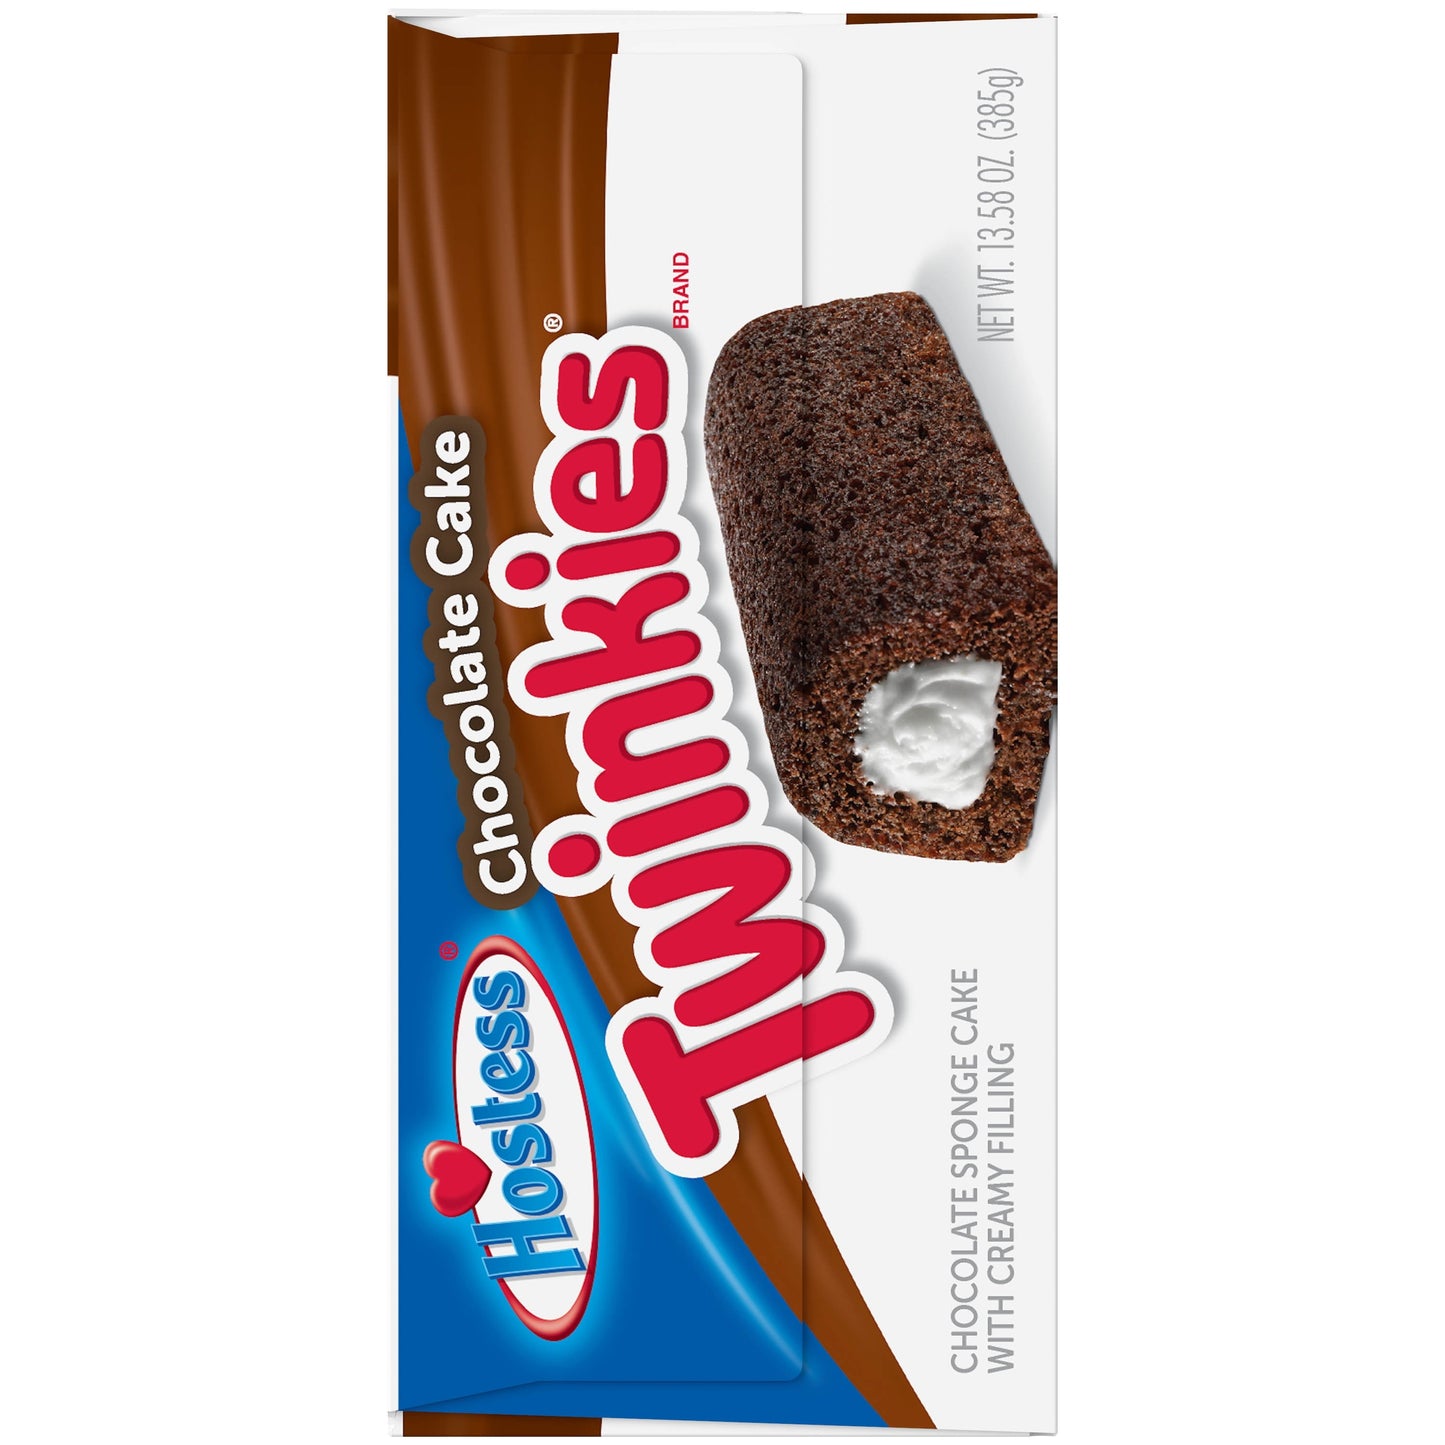 Hostess Chocolate Lovers Twinkie 13.58oz 10ct